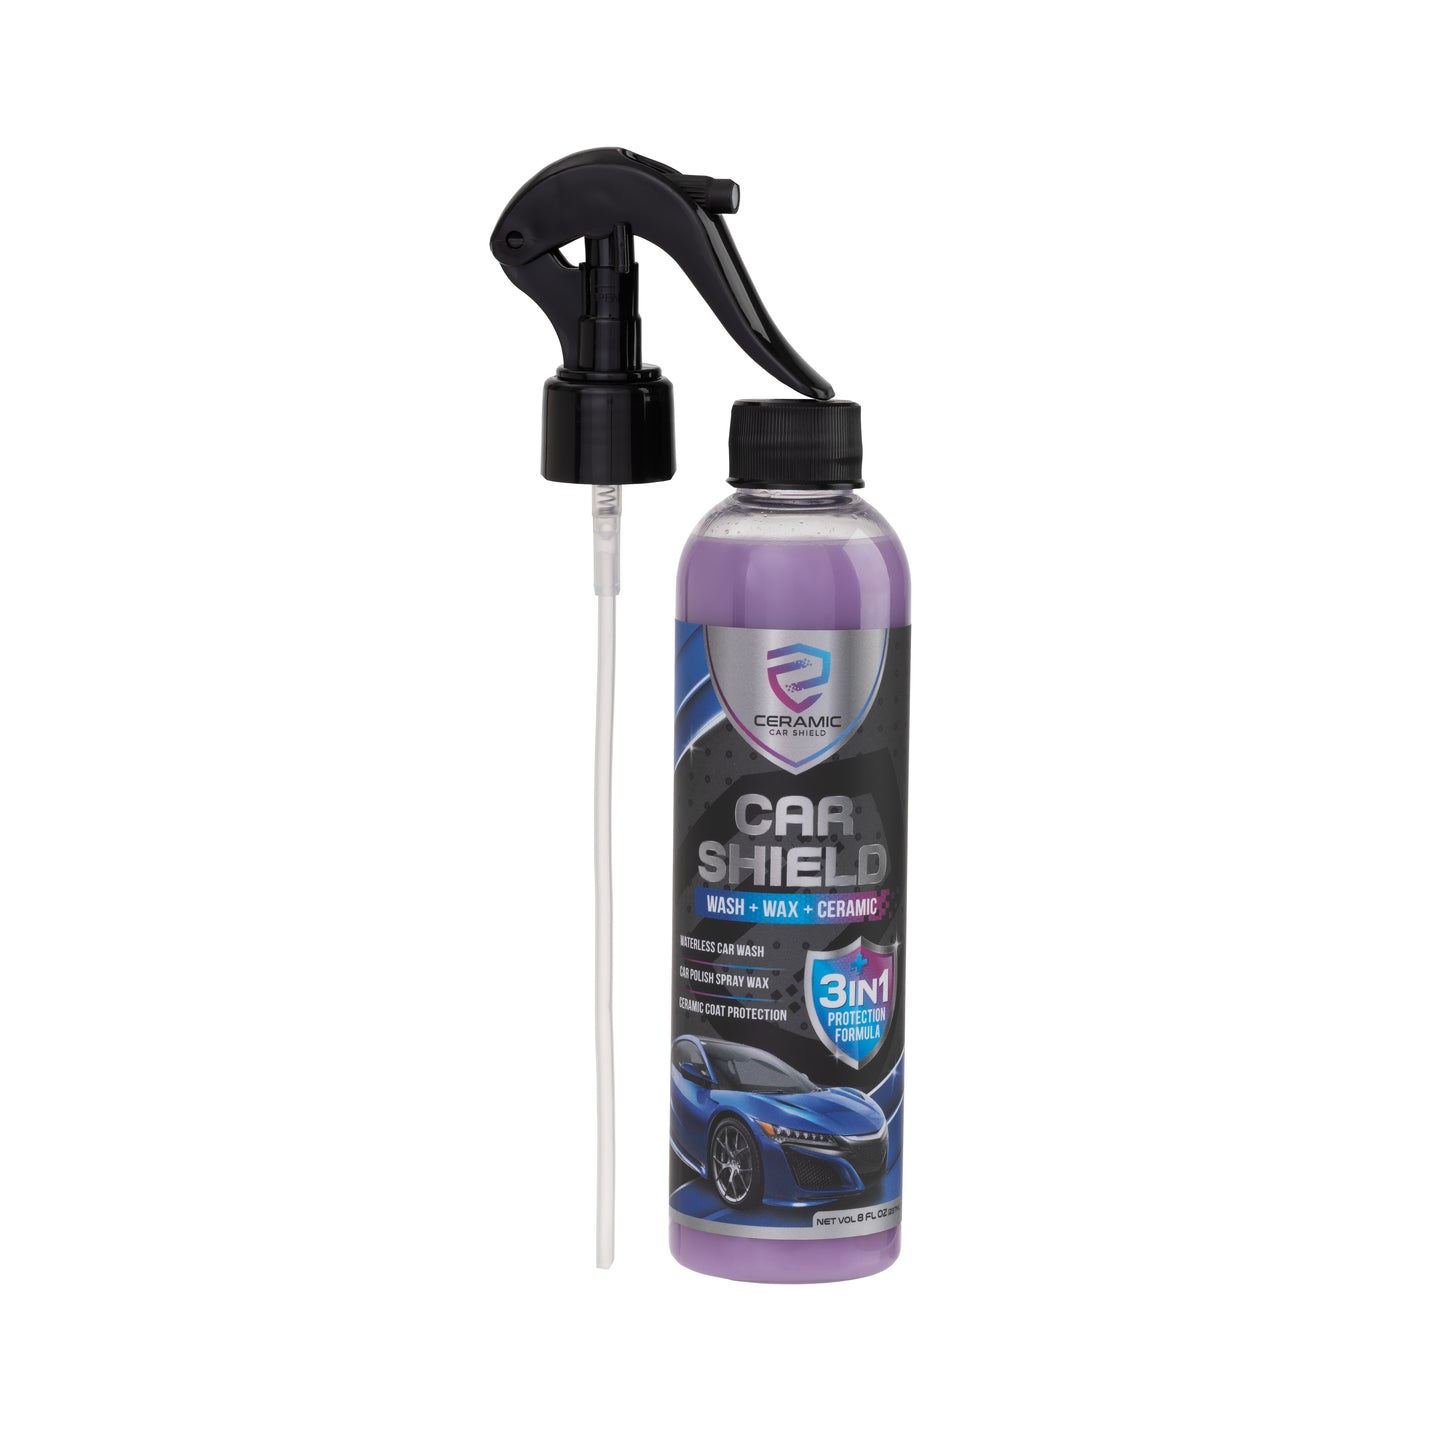 Theekart Shine Armor Quick Coat – Ceramic Coating - Car Wax Spray